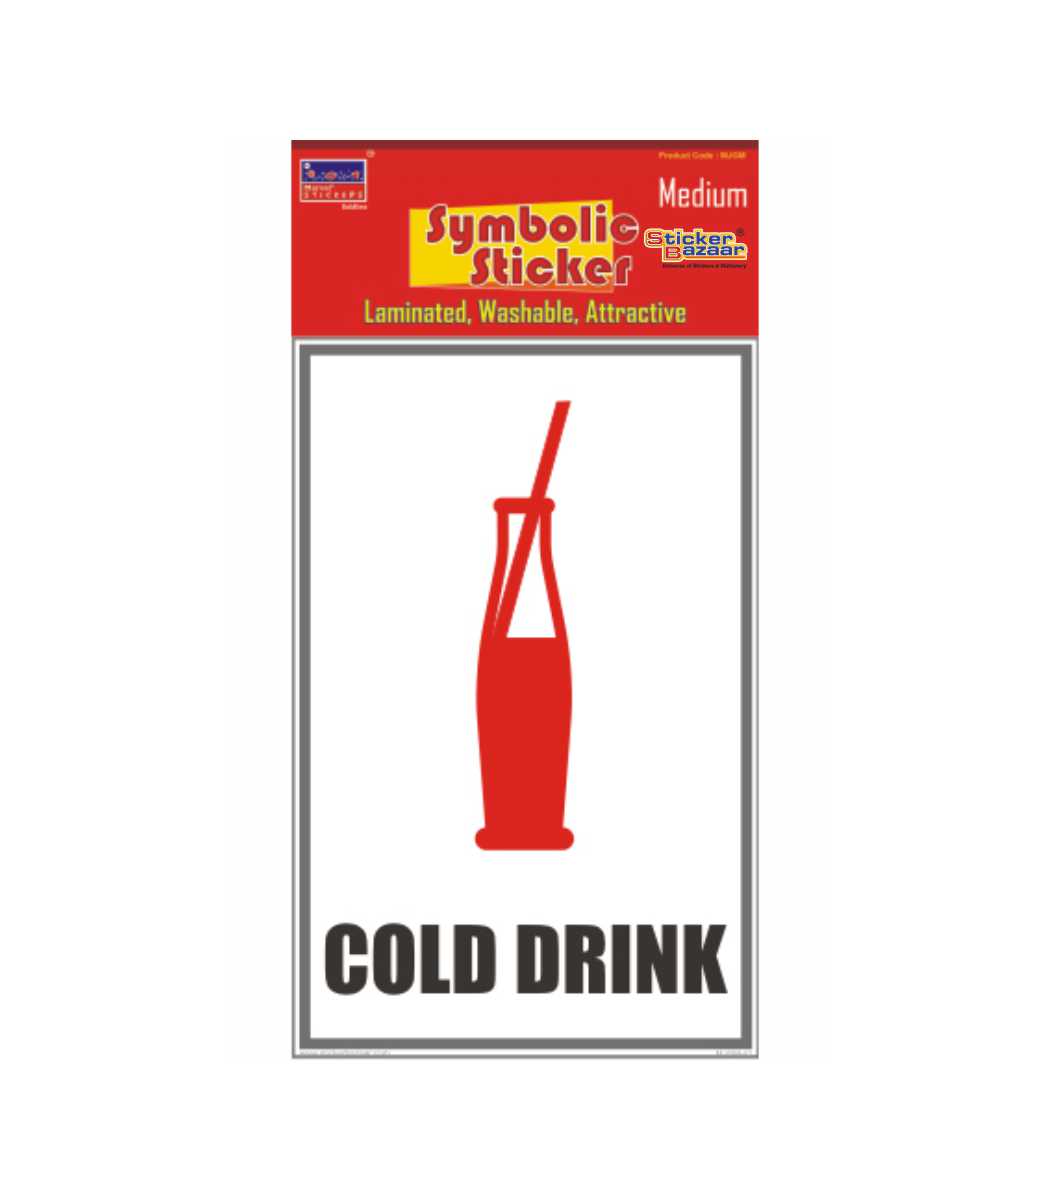 Cold Drink Medium Symbolic Sticker